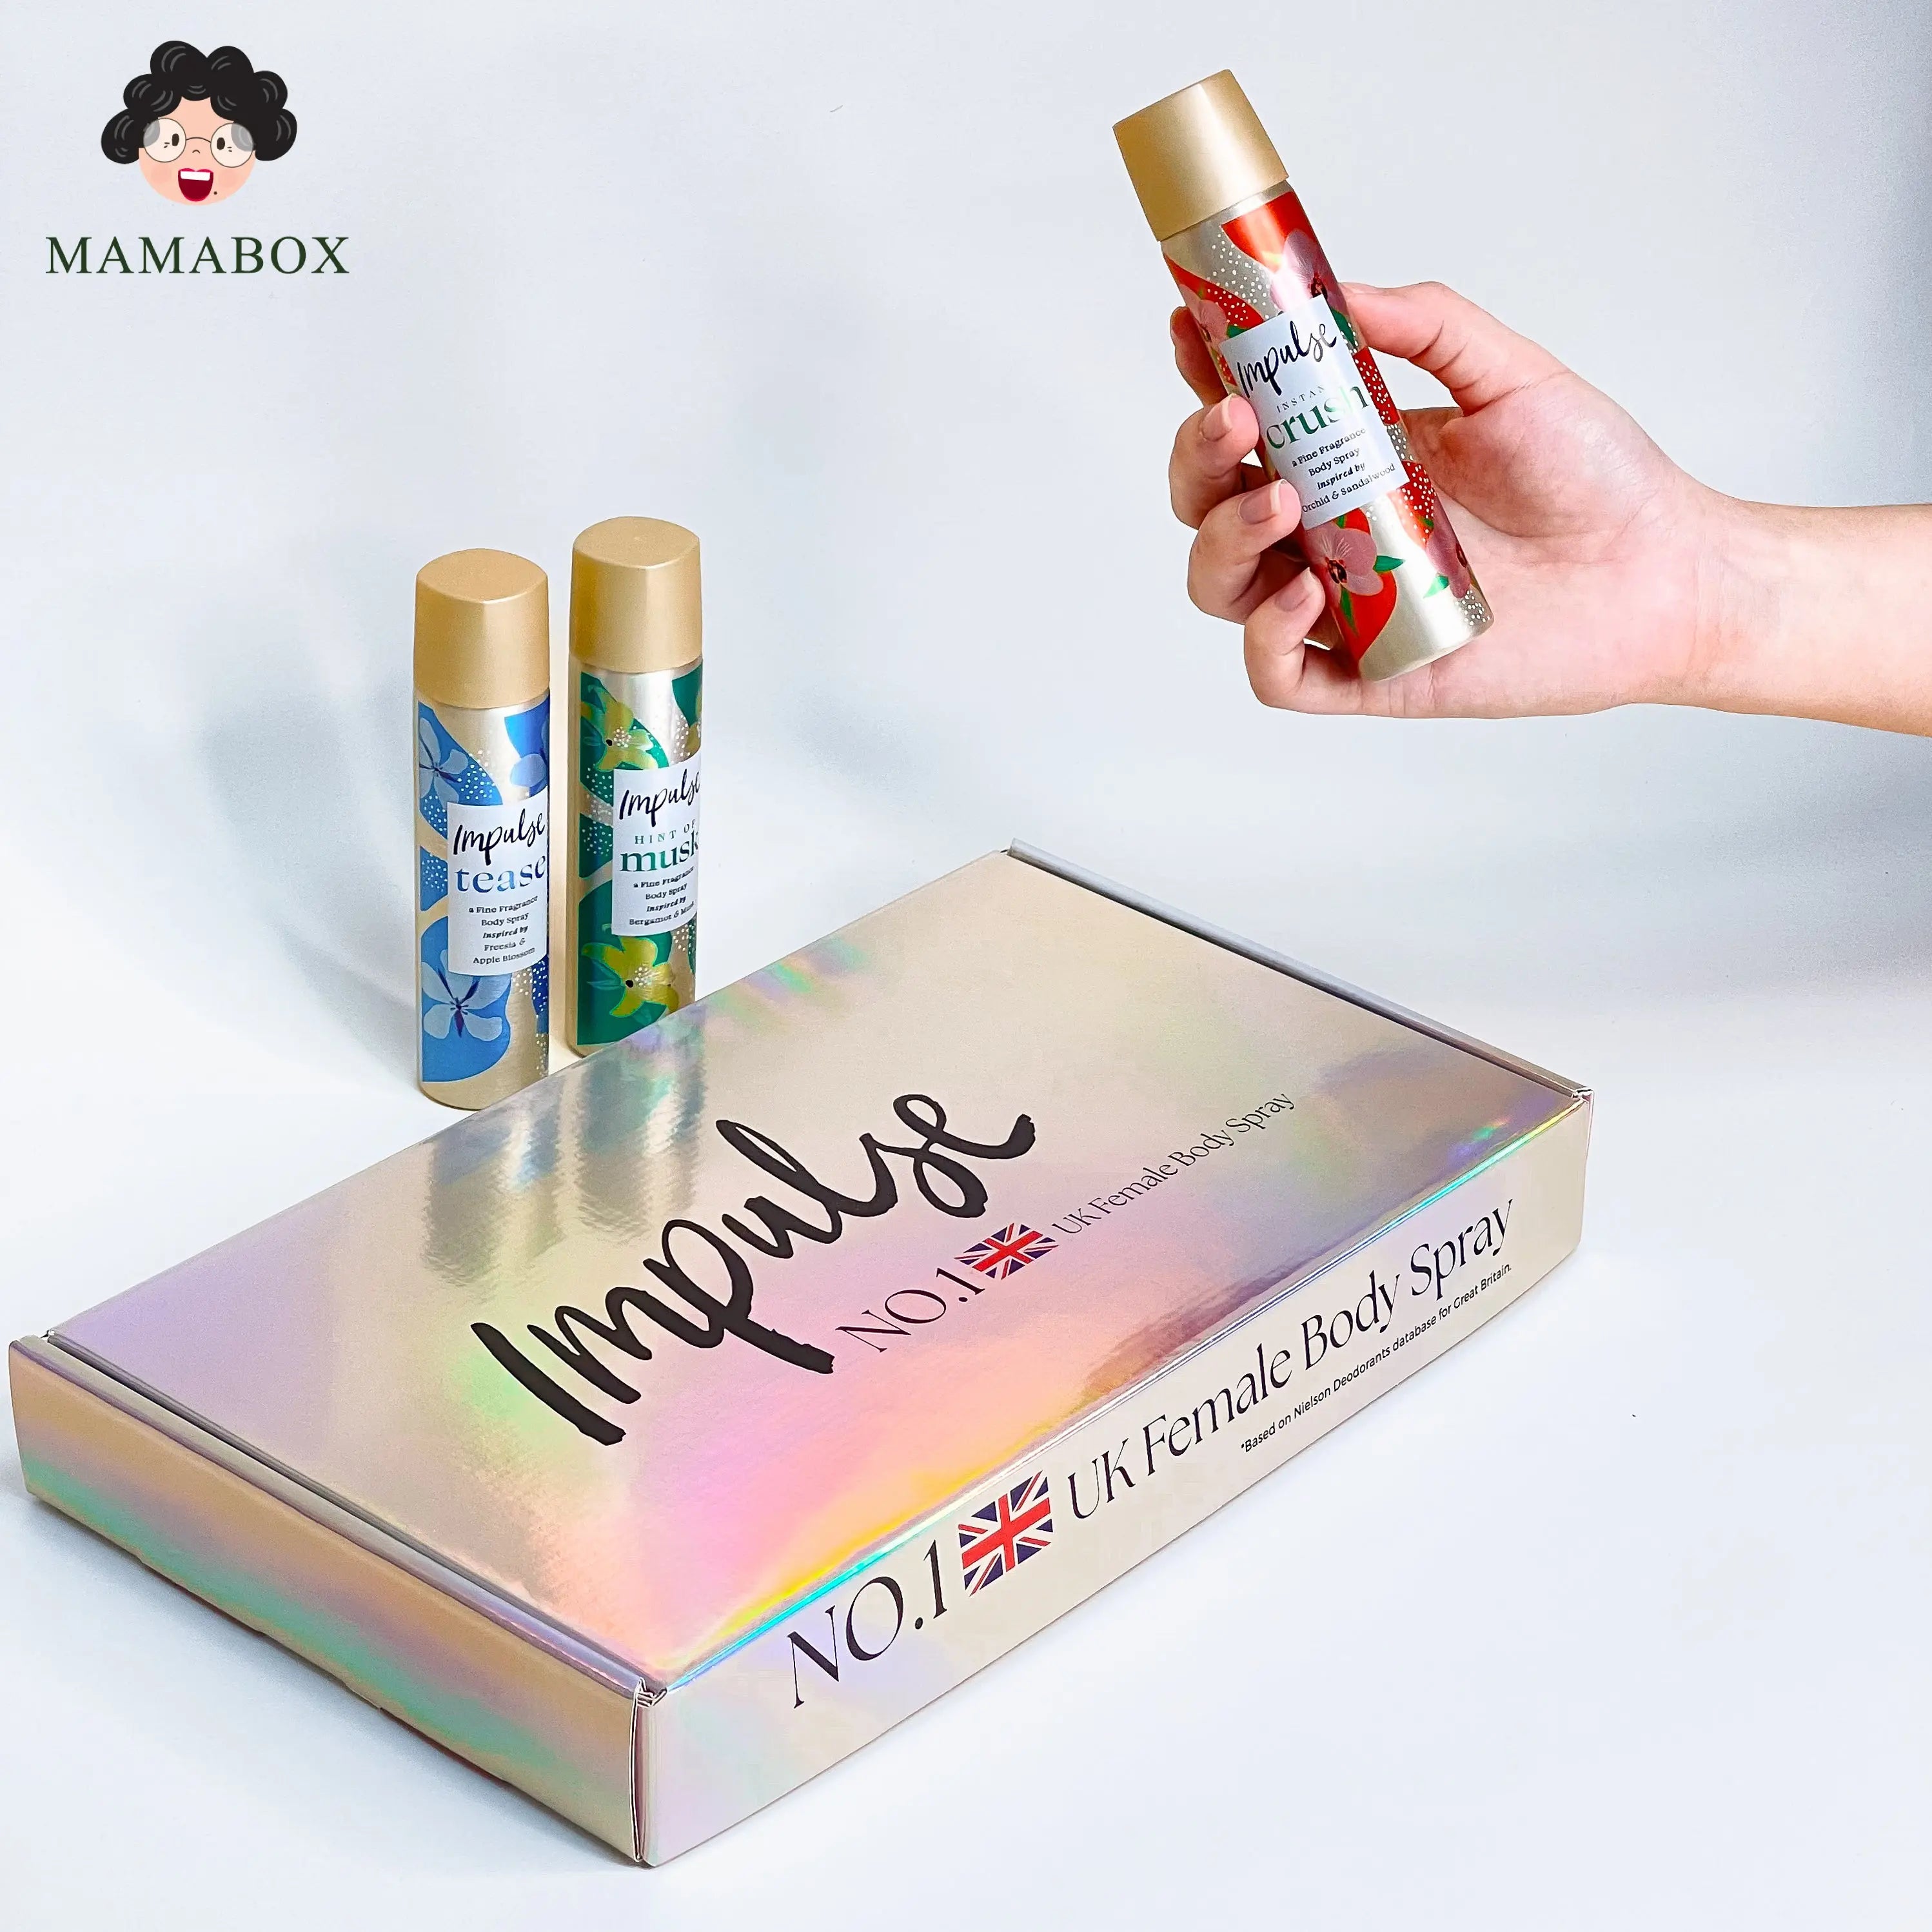 [BUNDLE OF 6]Impulse Body Spray Deodorant New Packaging 75ml - mamabox.sg